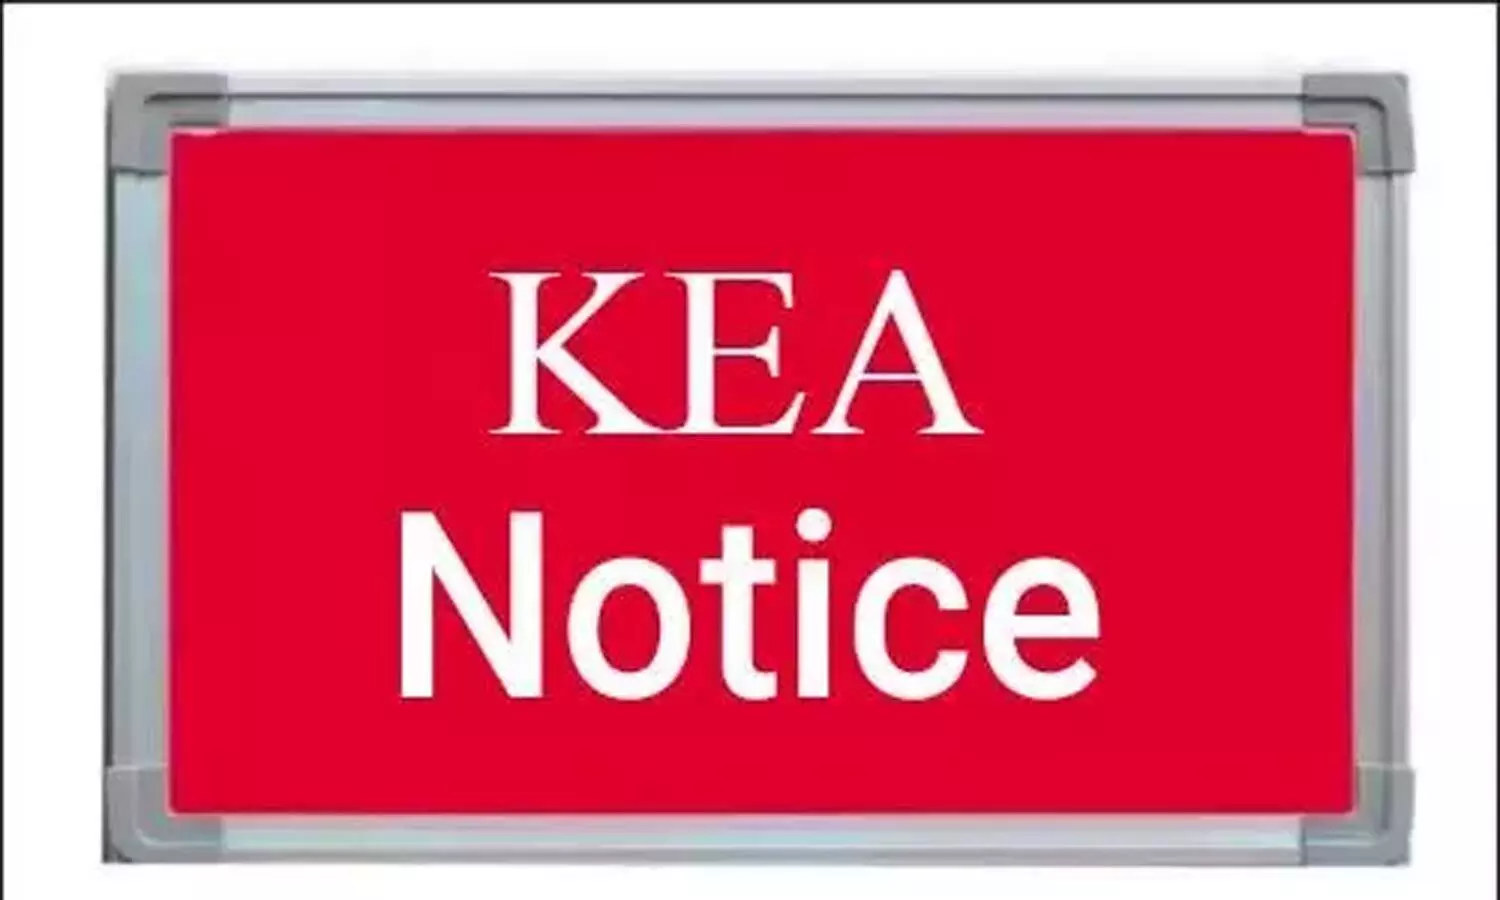 PGET 2020 Round 1 Choice filling: KEA publishes instructions